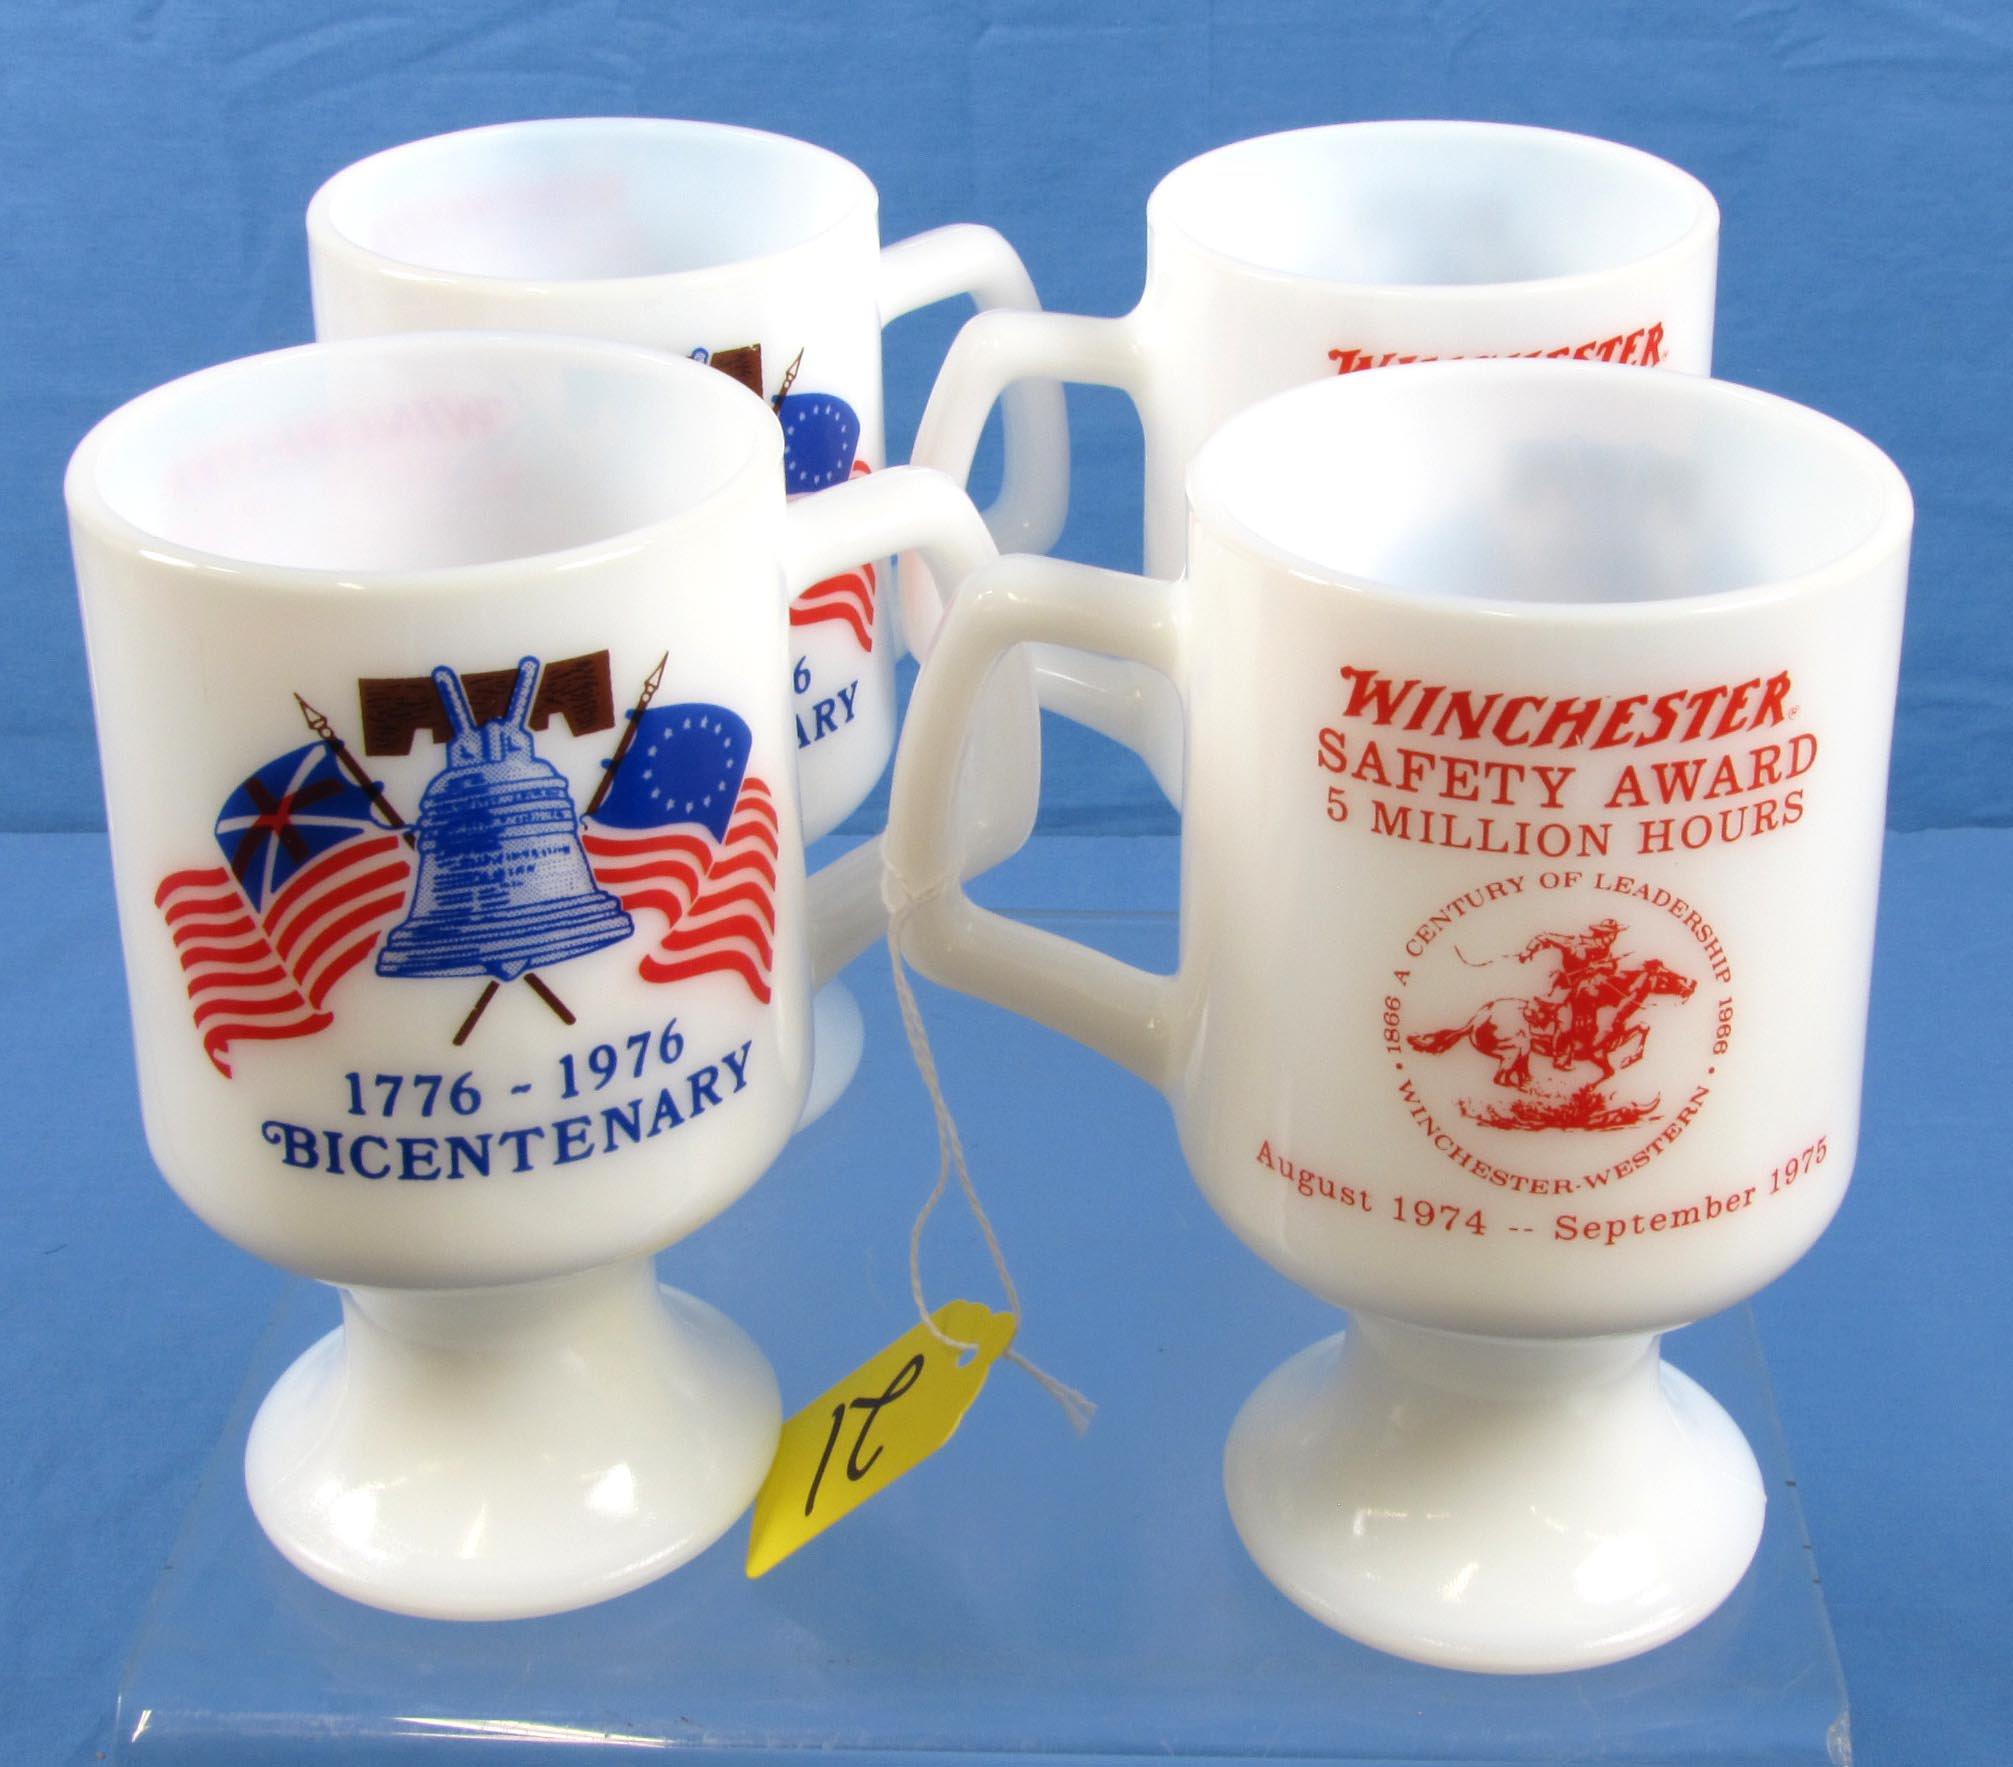 4 Milk Glass Stemmed Mugs; 1776-1976 Bicentenary; Winchester Safety Award; 5 Million Hours; W/horse